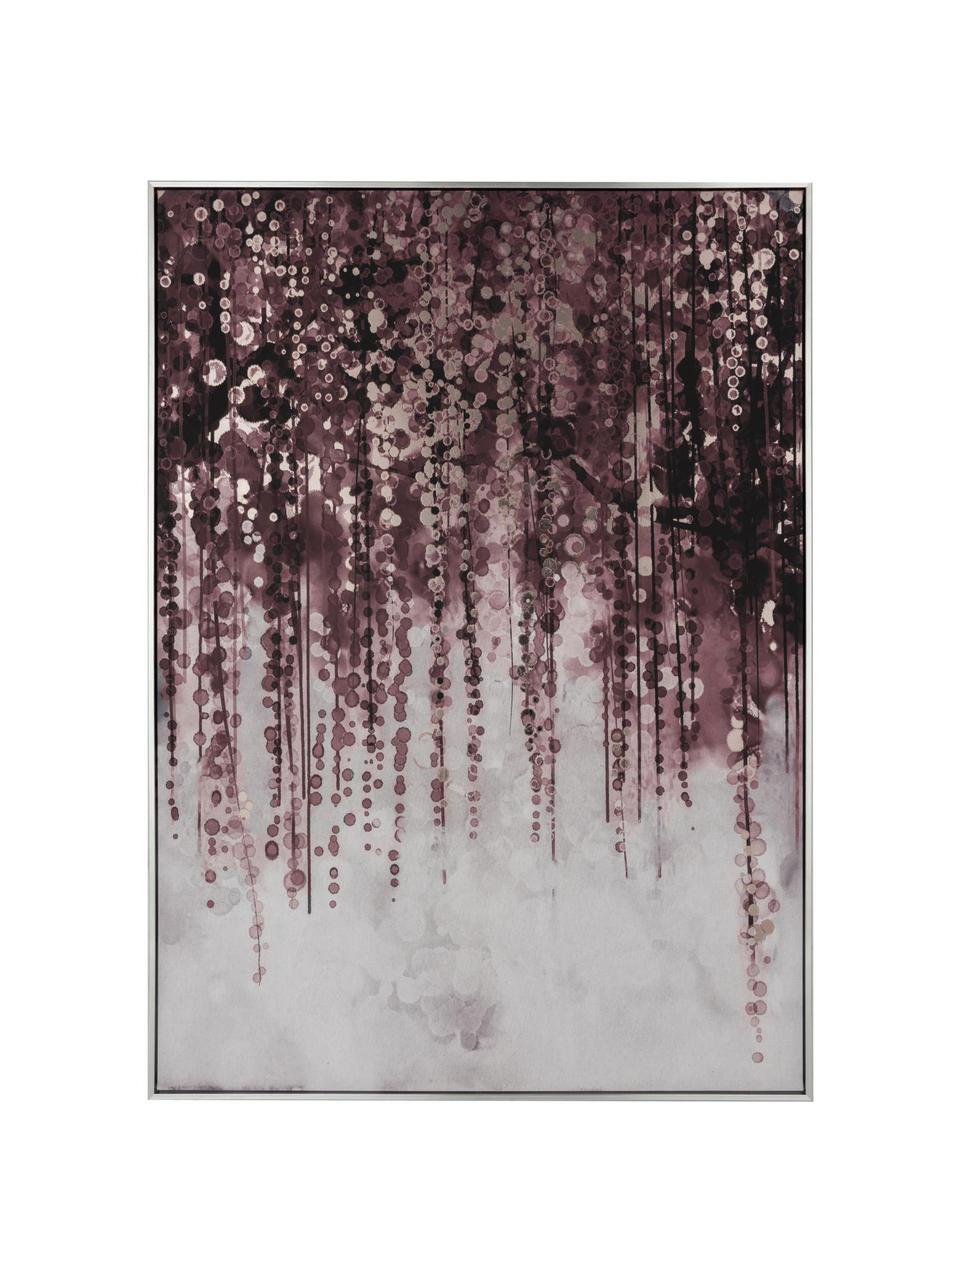 Leinwanddruck Willow, Rahmen: Kiefernholz, Kunststoff, , Bild: Leinwand, Lila,Braun,Grau, B 103 x H 143 cm